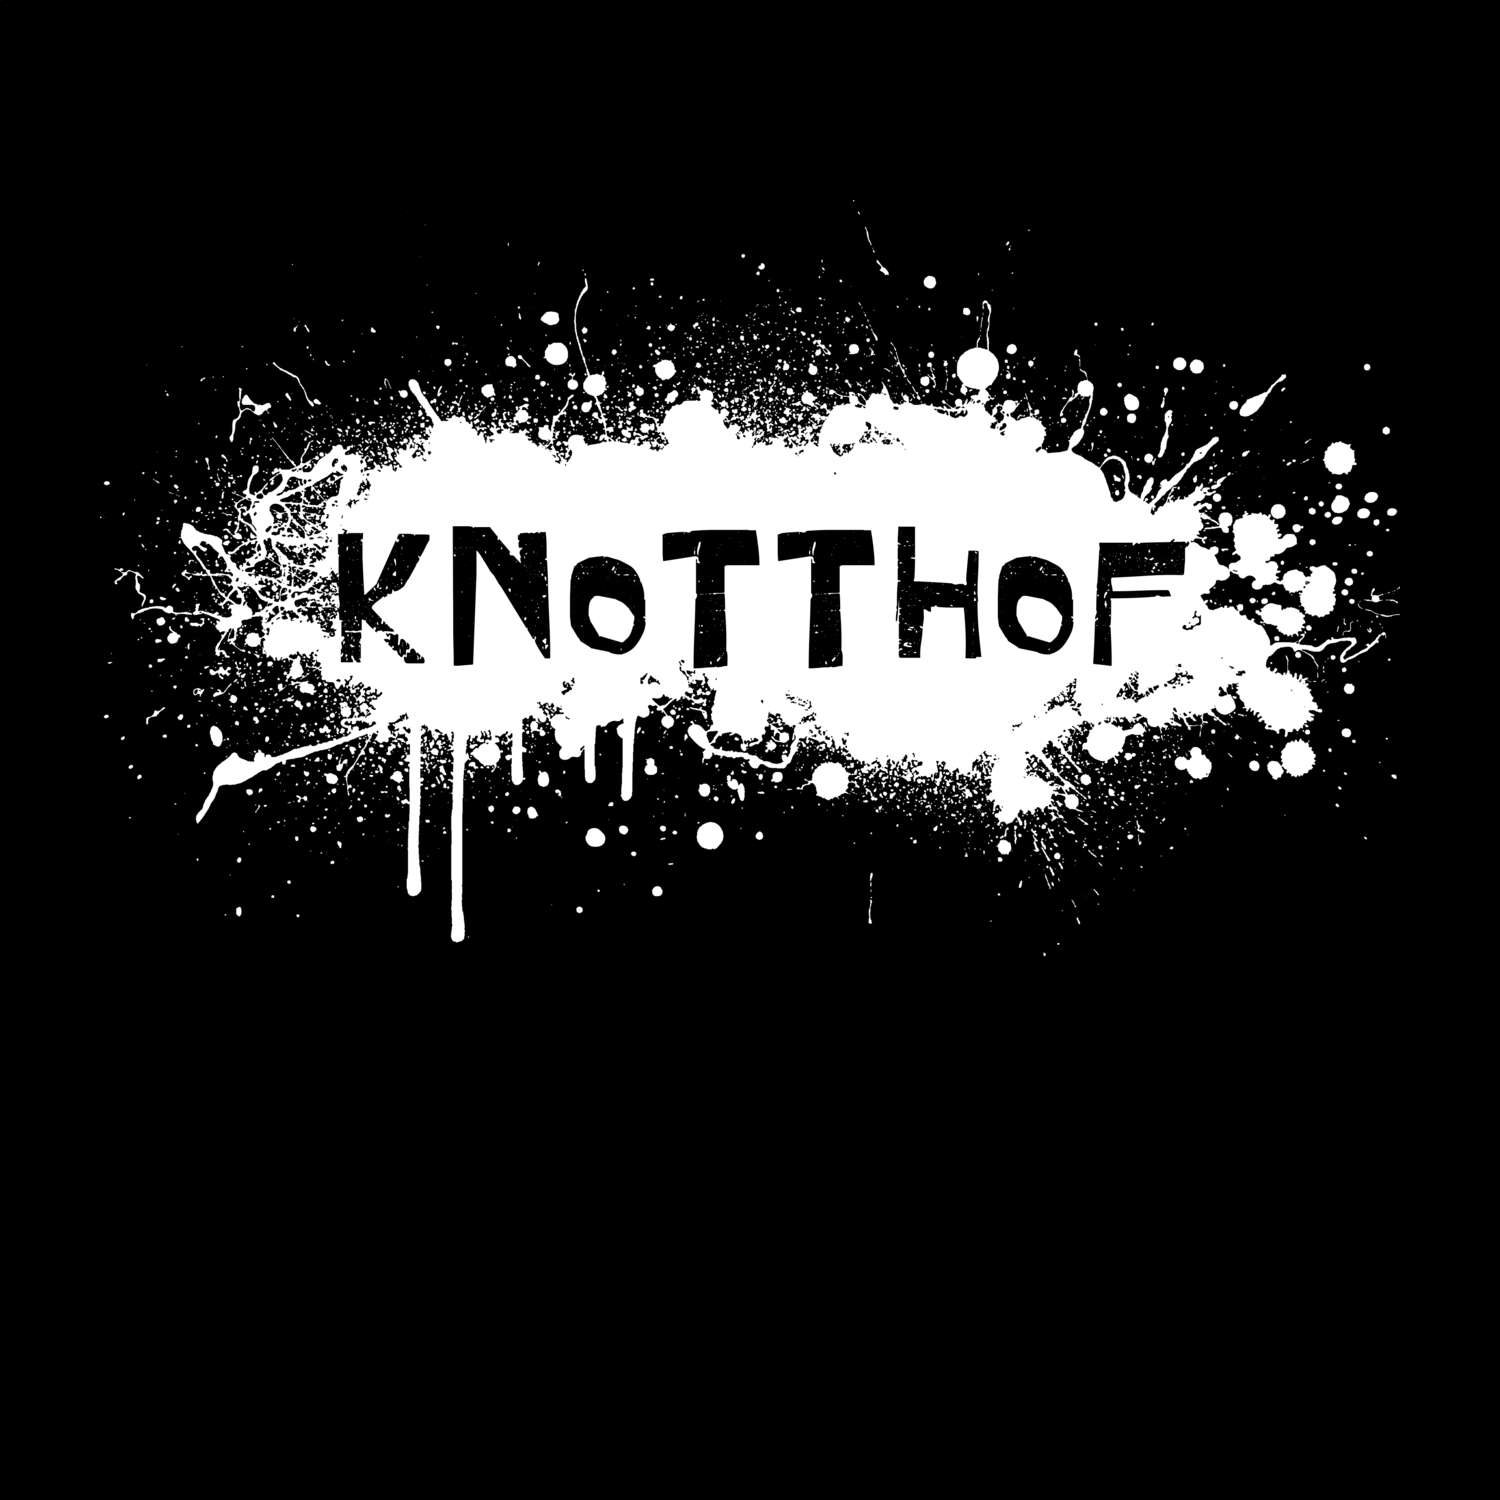 Knotthof T-Shirt »Paint Splash Punk«